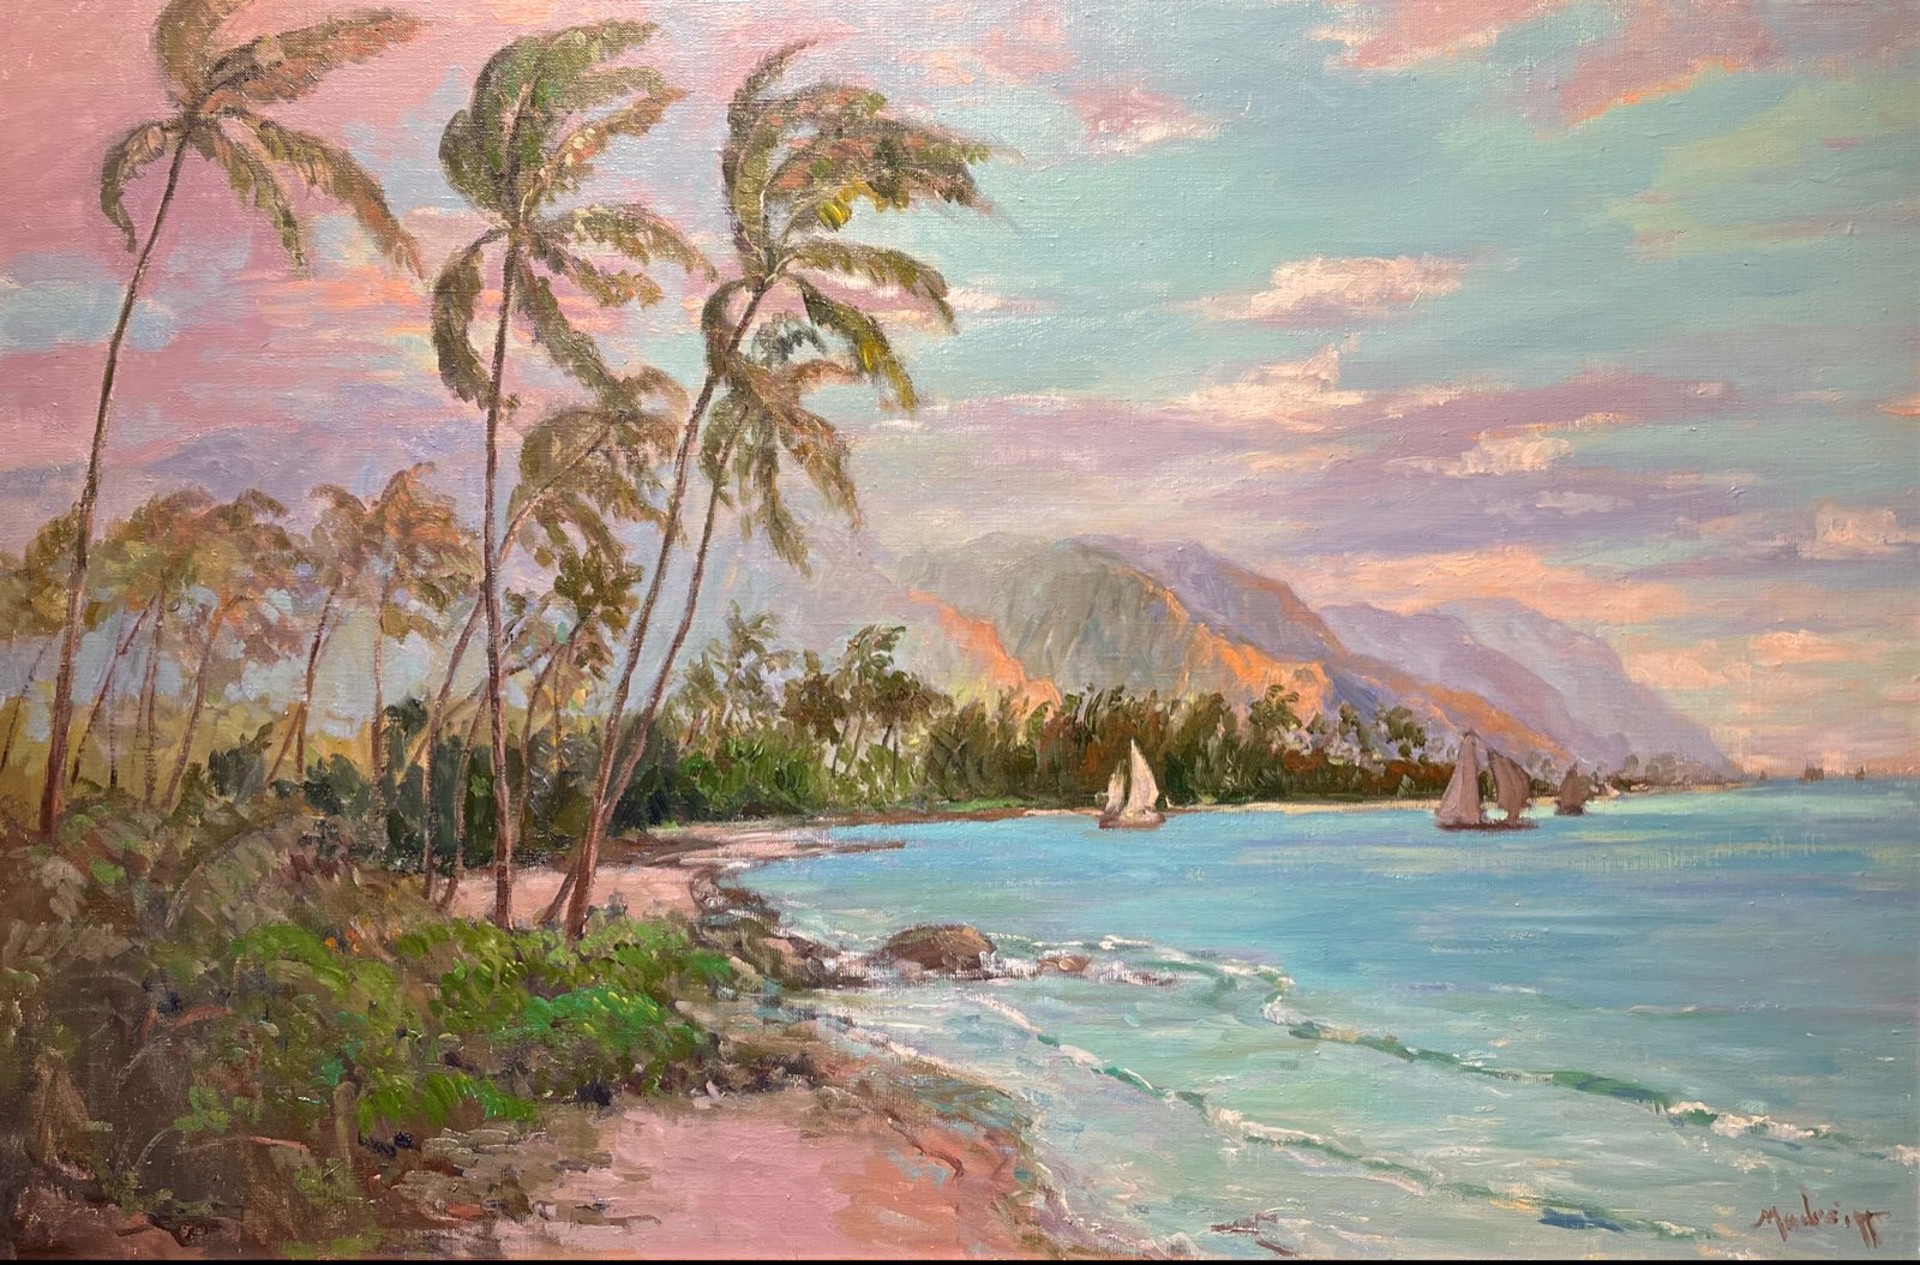 North Shore Kauai by John Modesitt